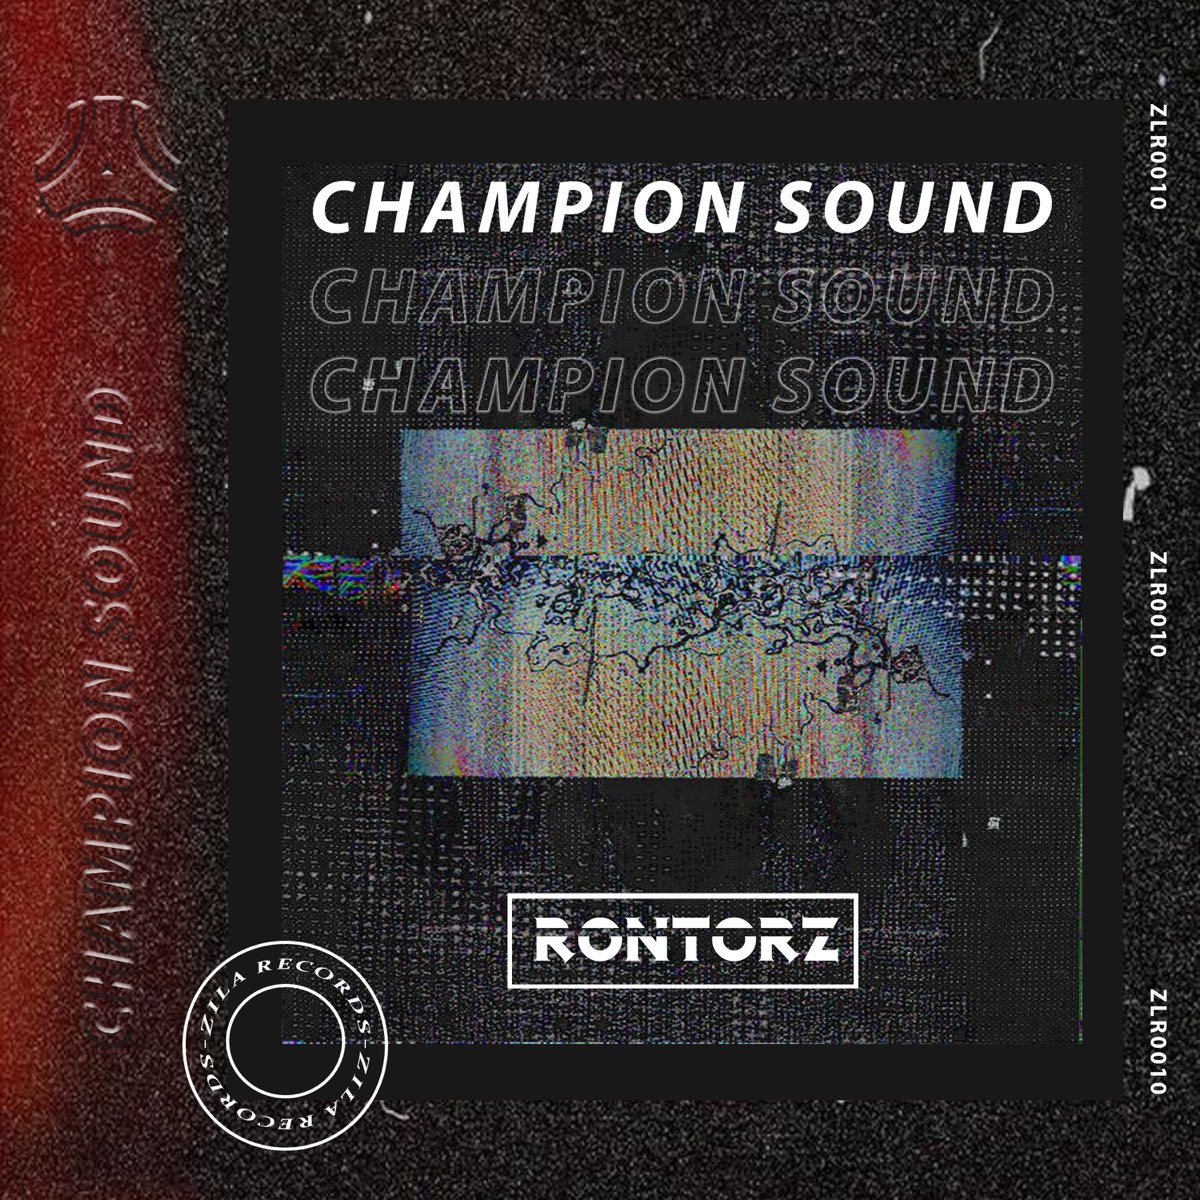 Champion Sound - Single on Apple Music